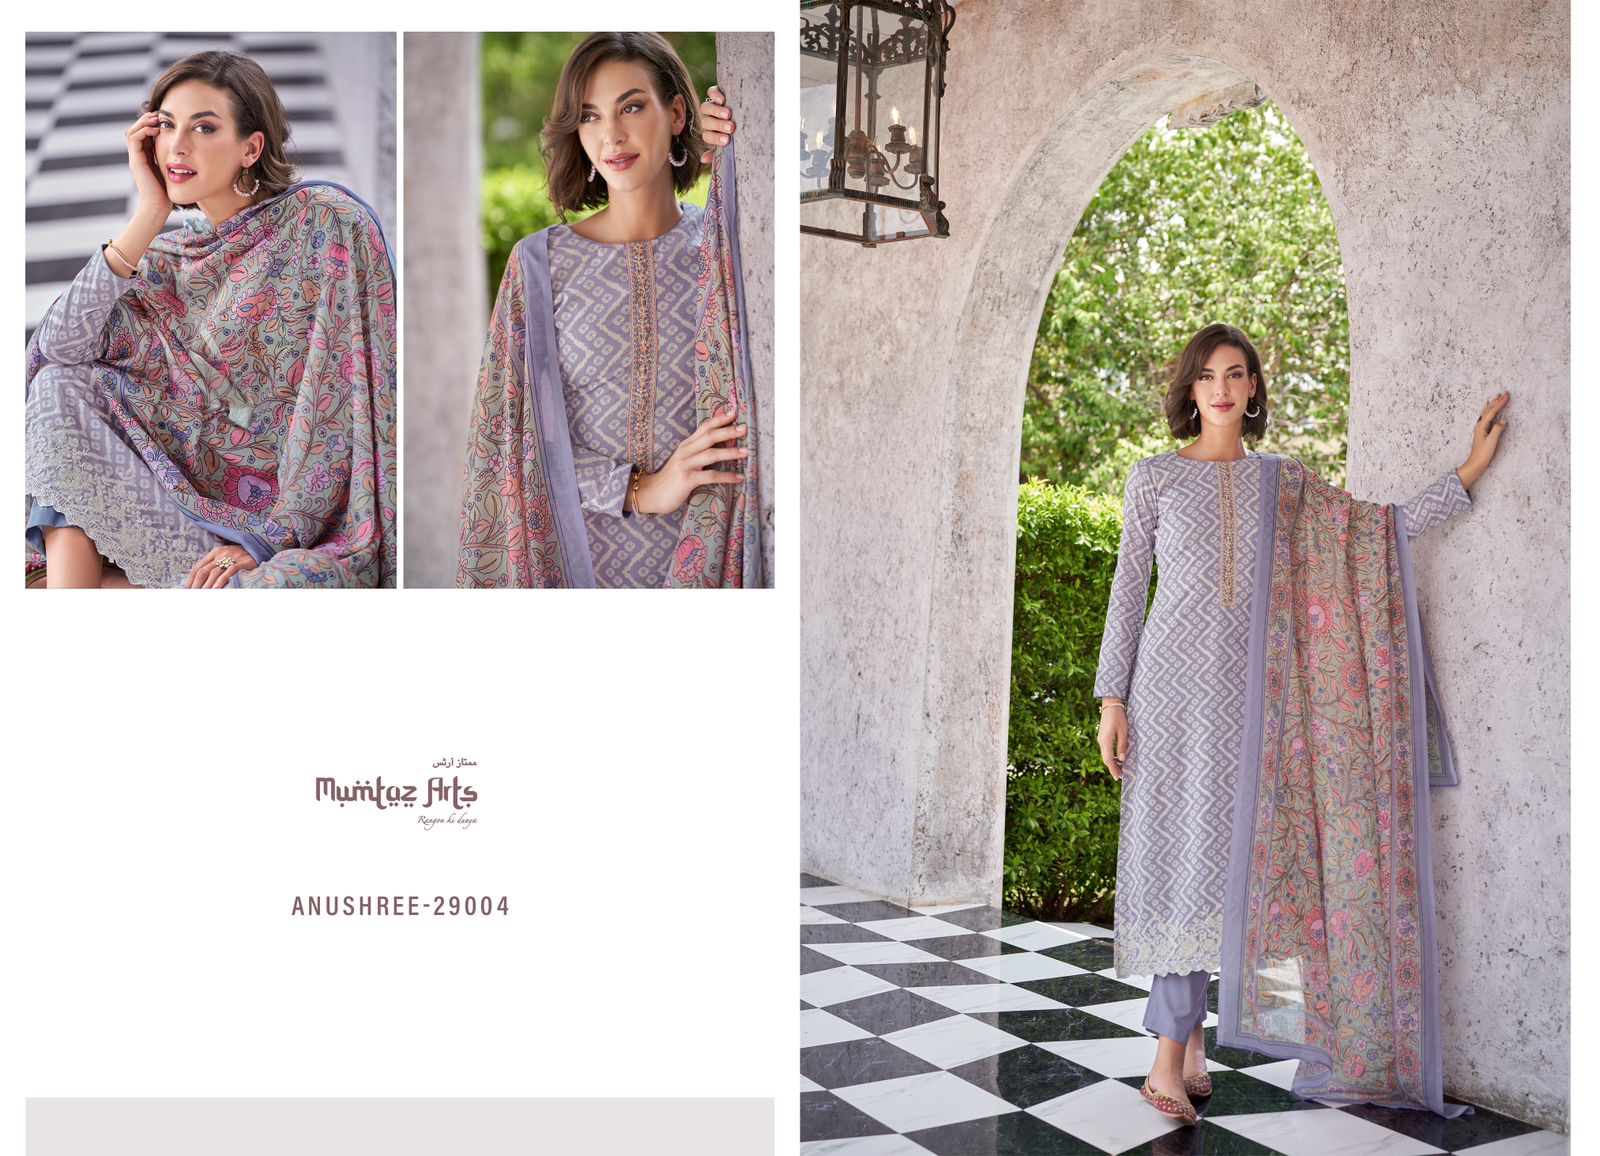 mumtaz art anushree cotton attrective look salwar suit catalog